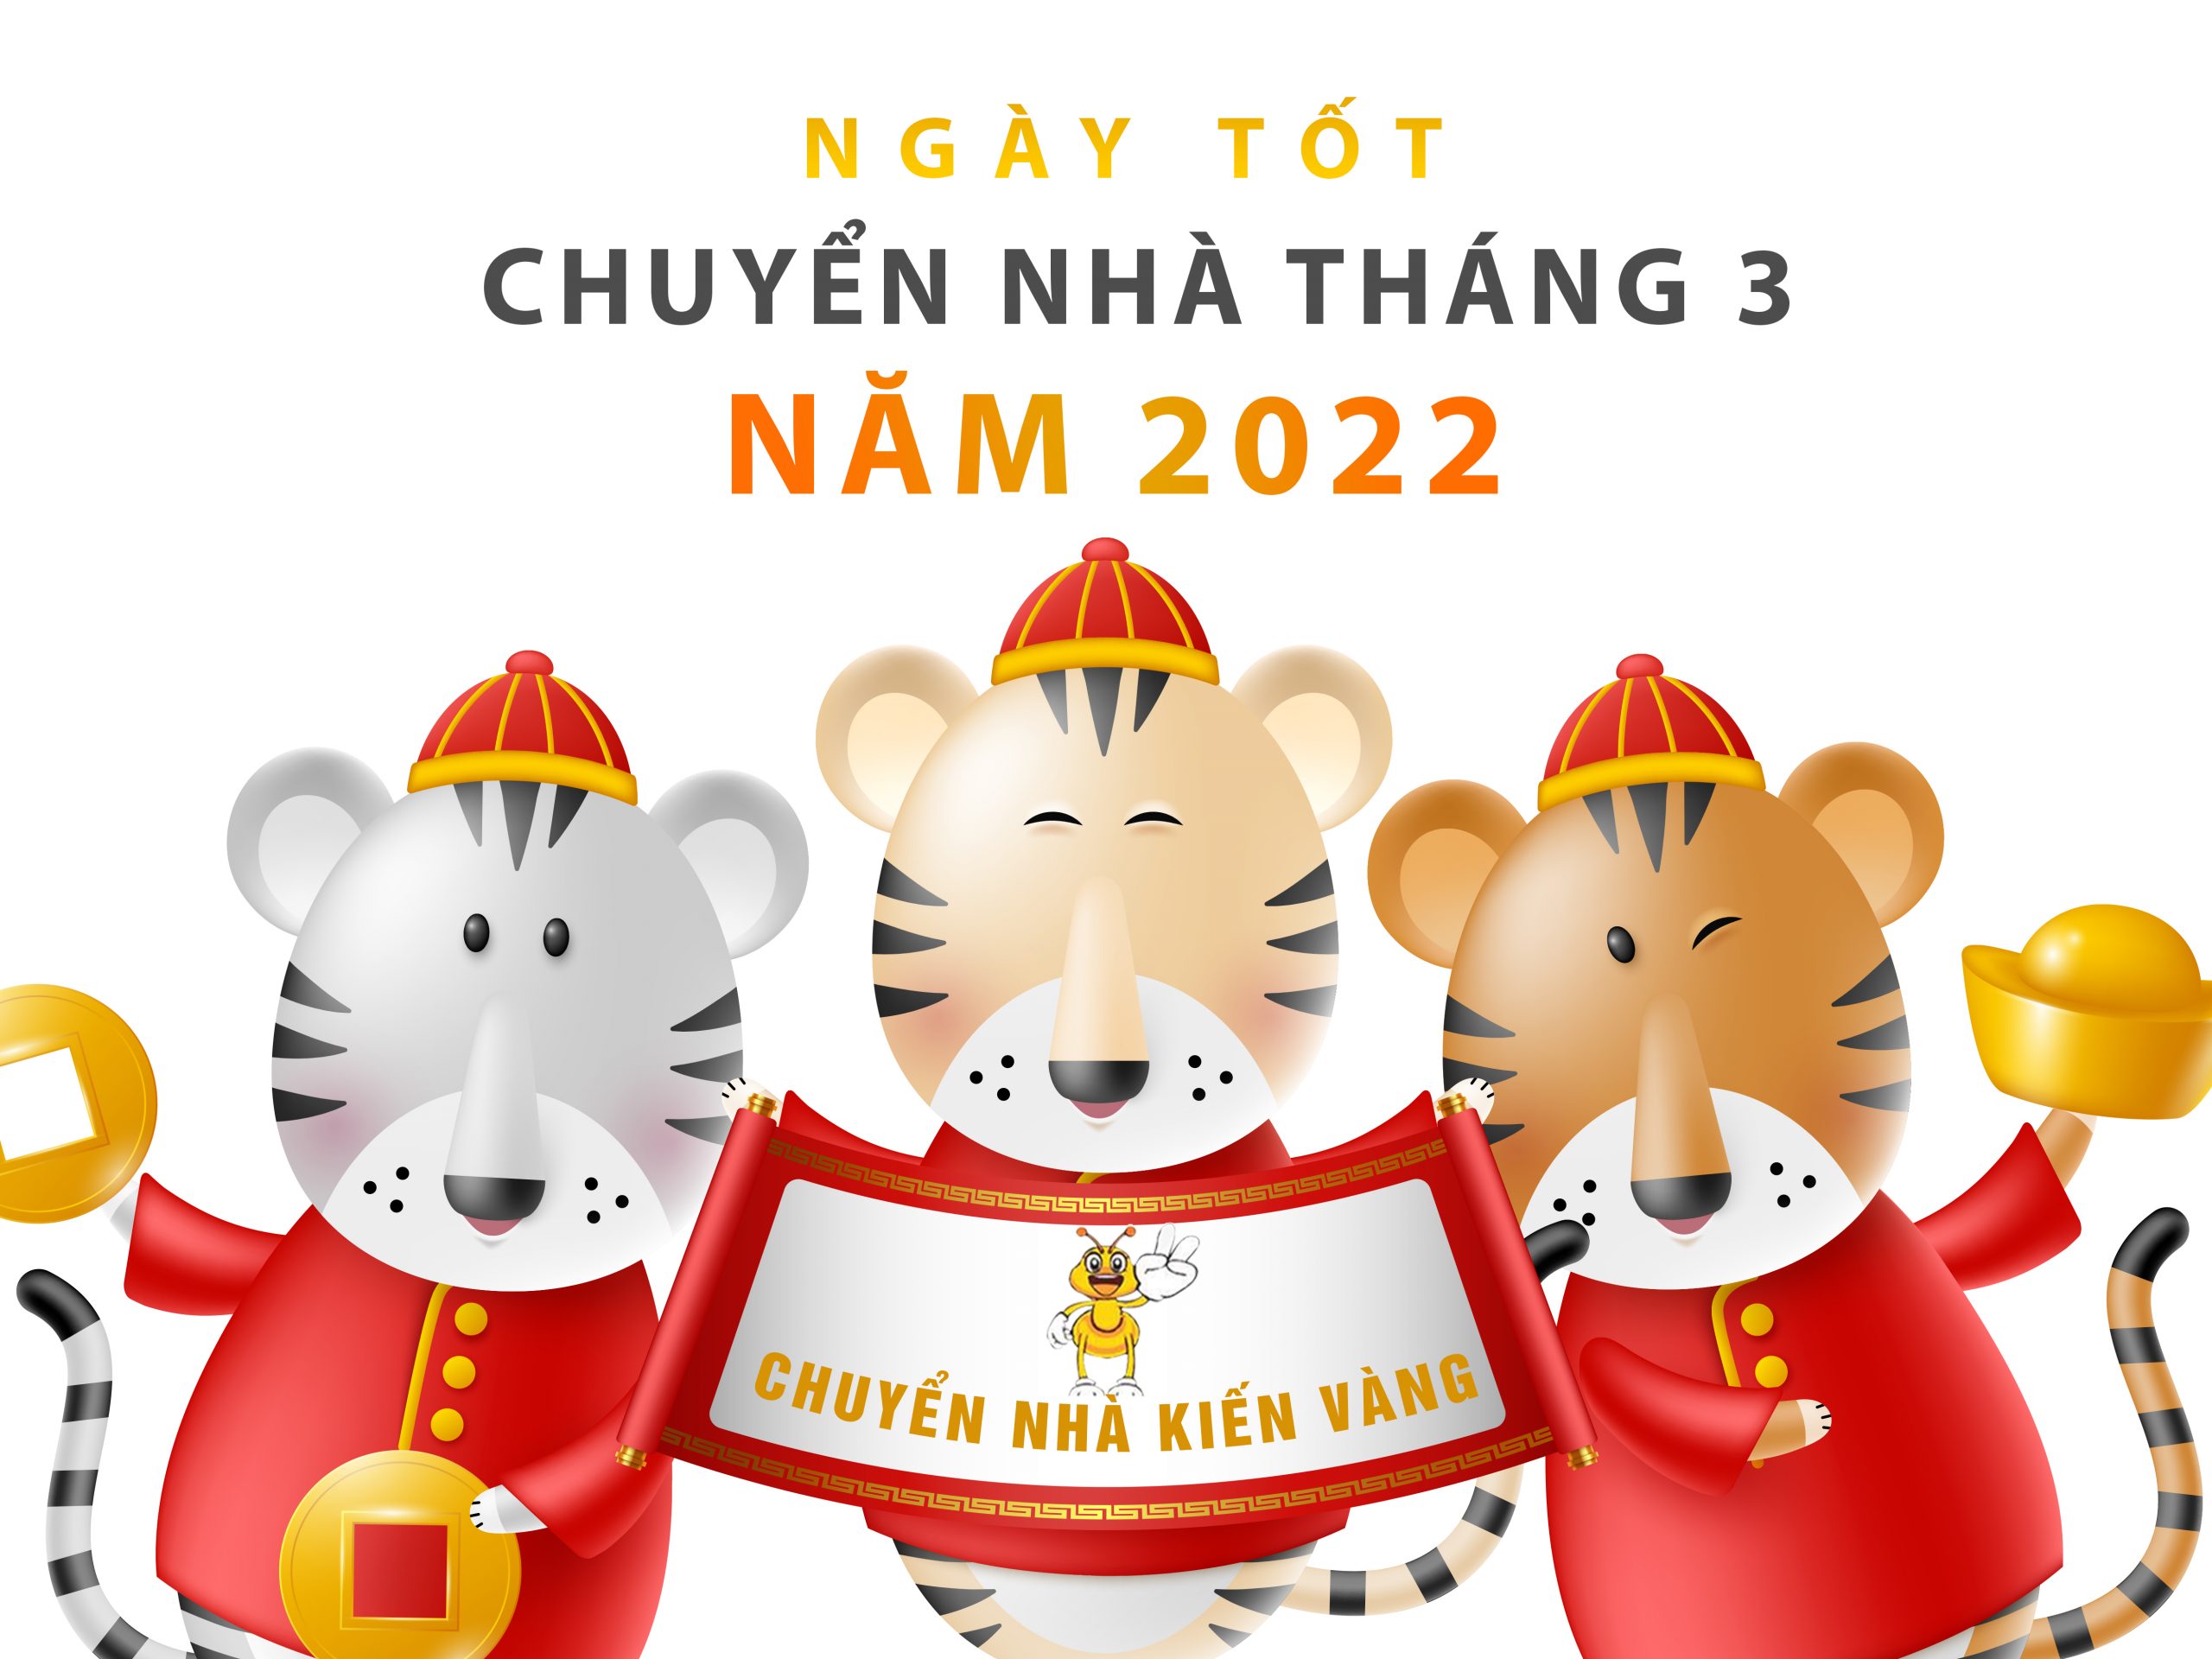 ngay-tot-chuyen-nha-thang-3-nam-2022-001